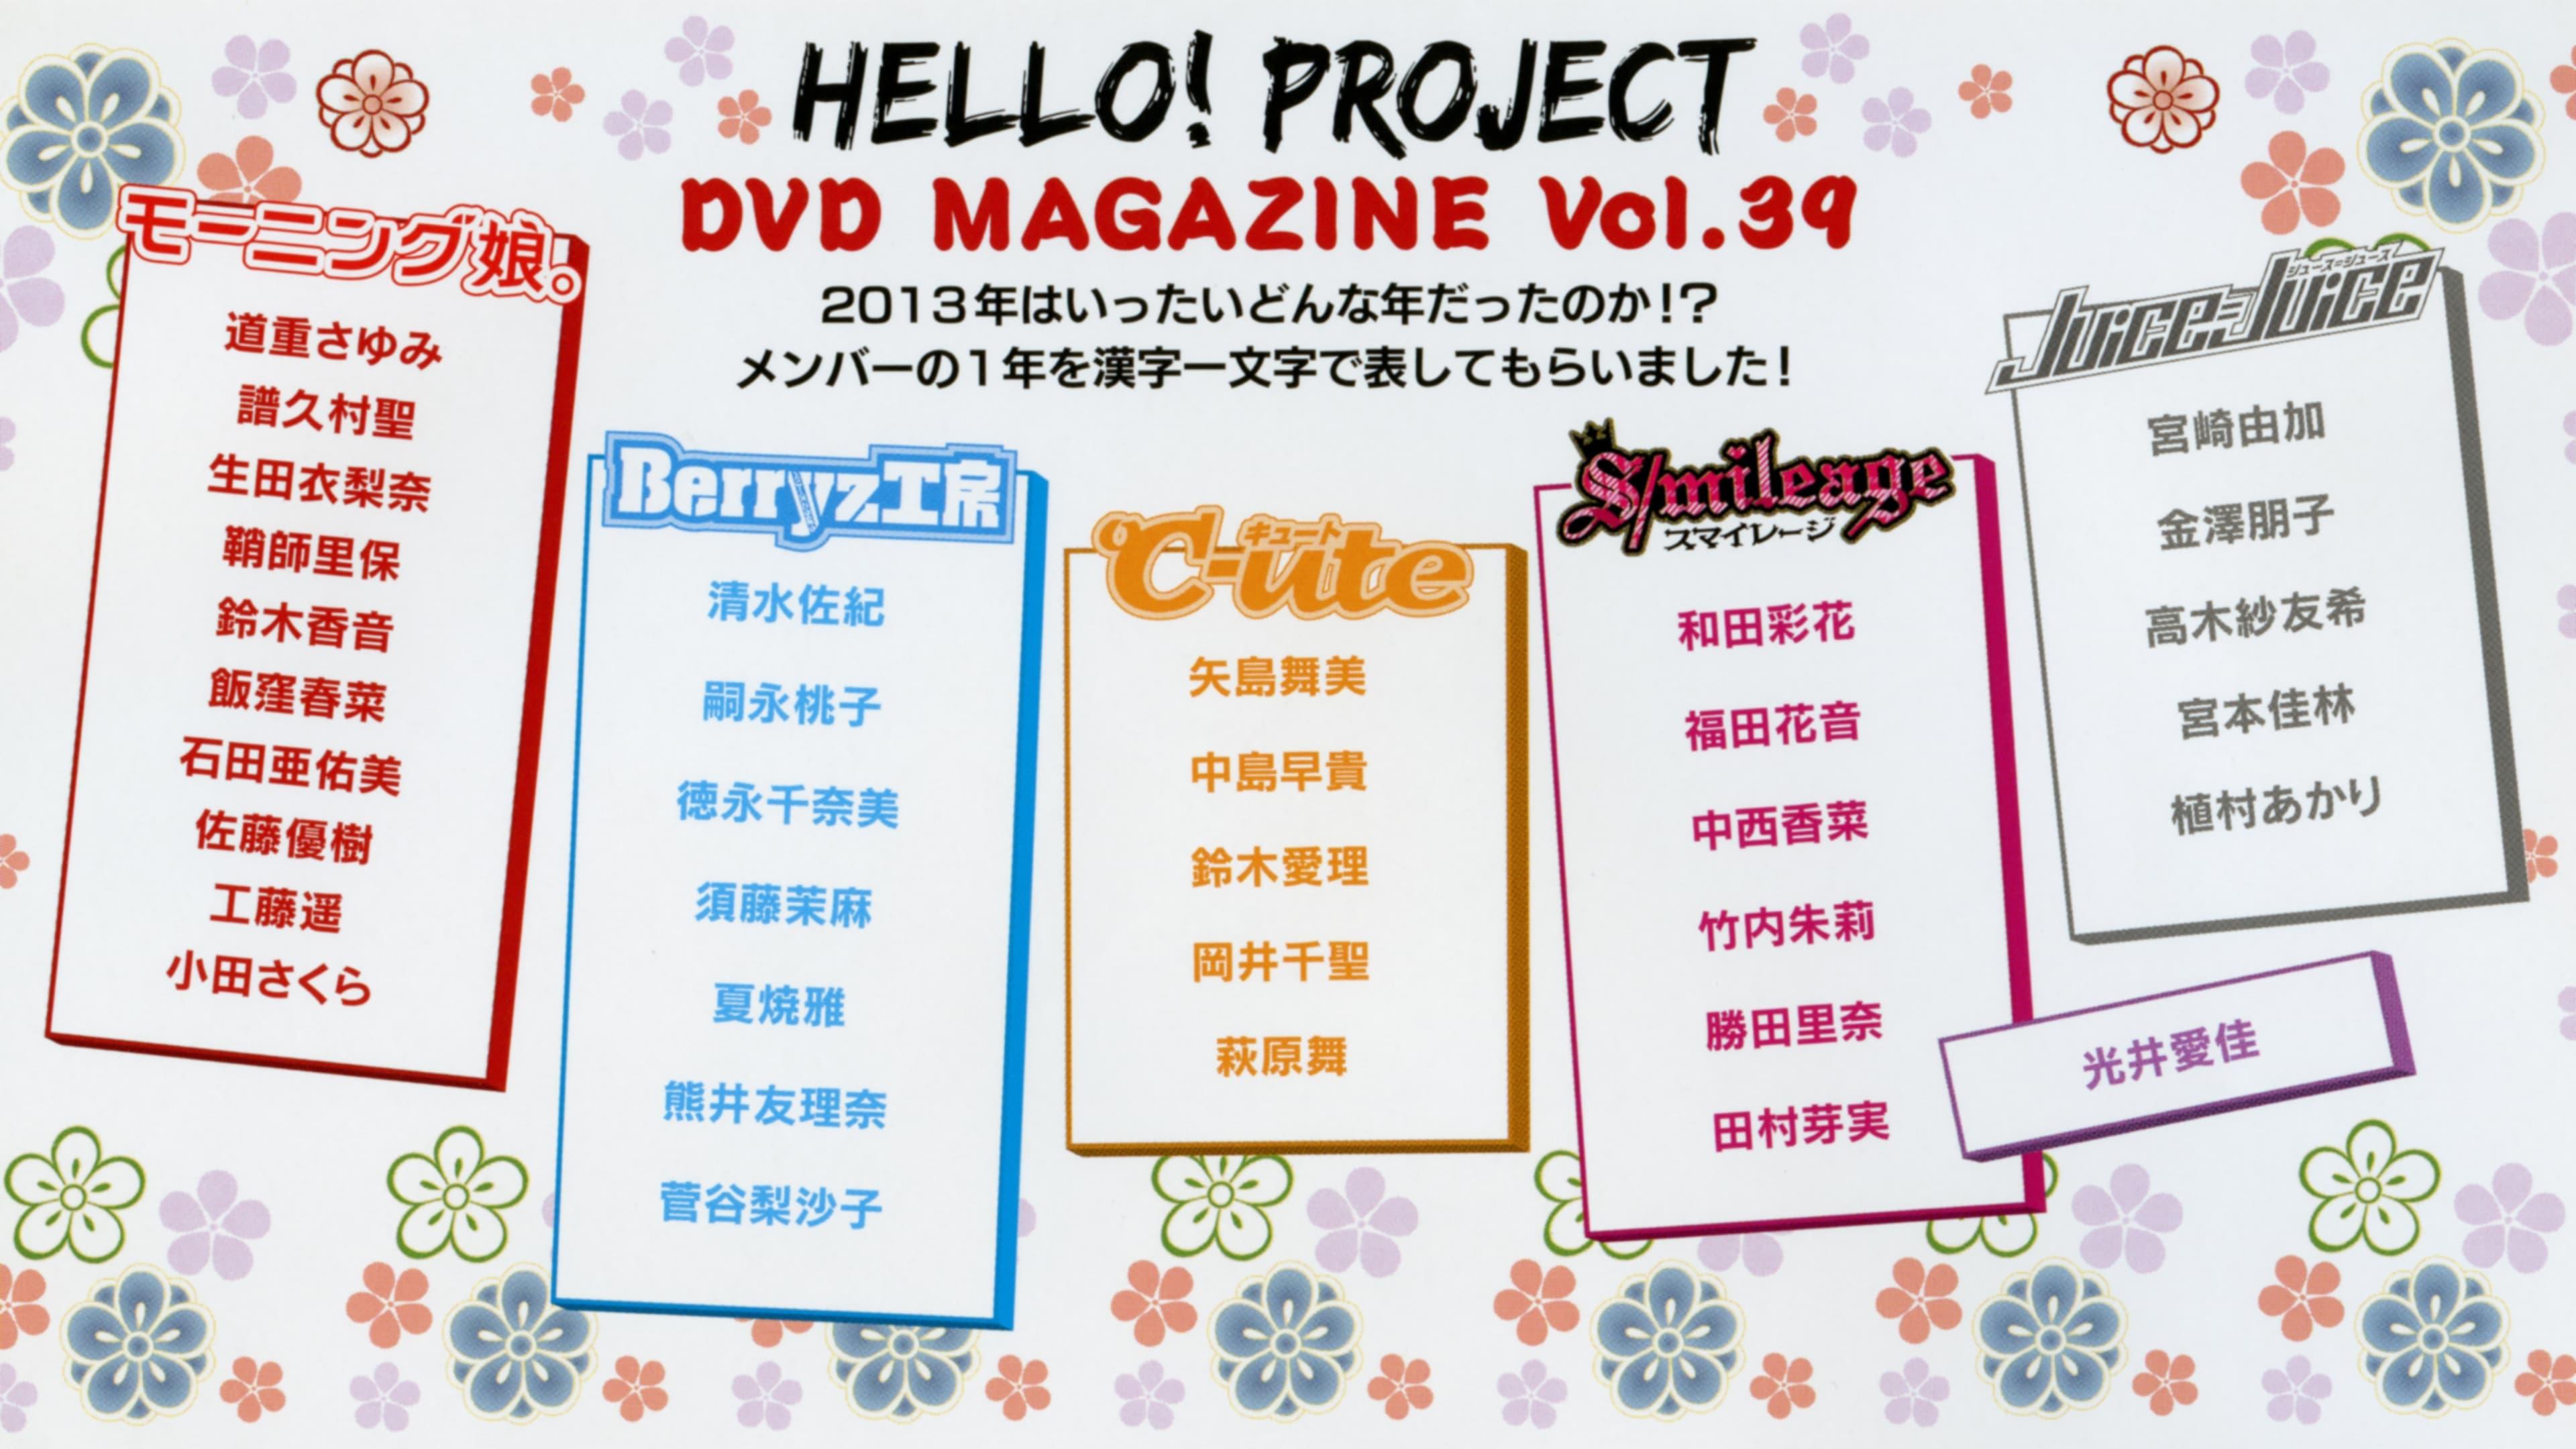 Hello! Project DVD Magazine Vol.39 backdrop